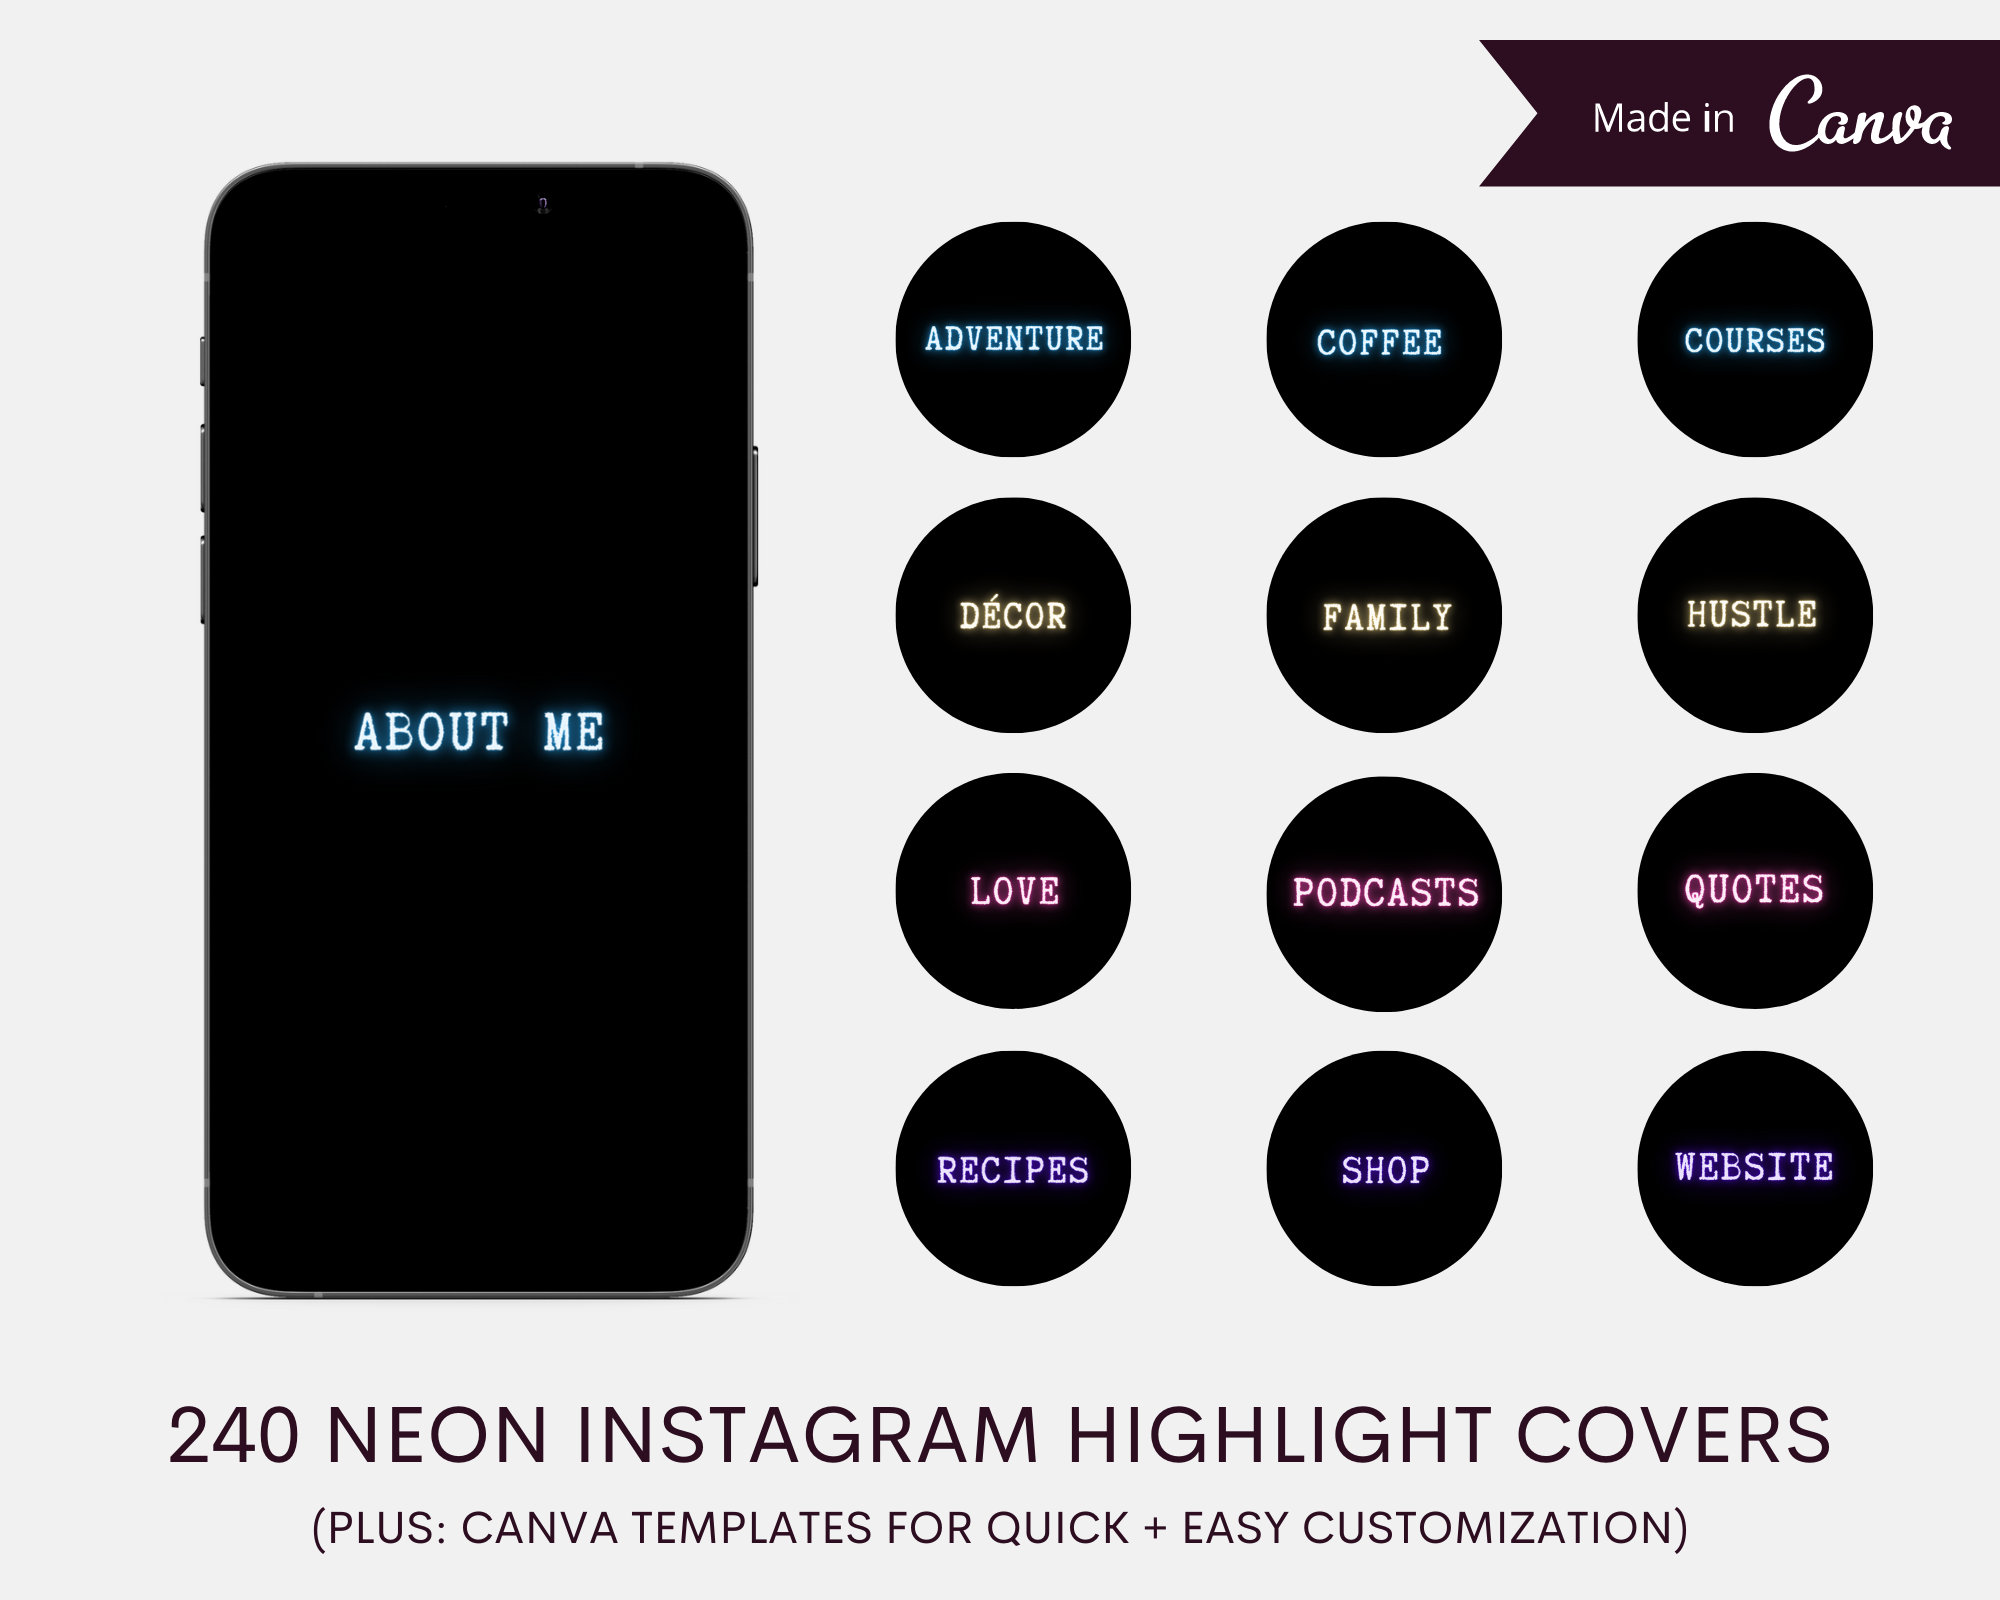 240 Neon Typewriter Font Instagram Highlight Covers - Etsy